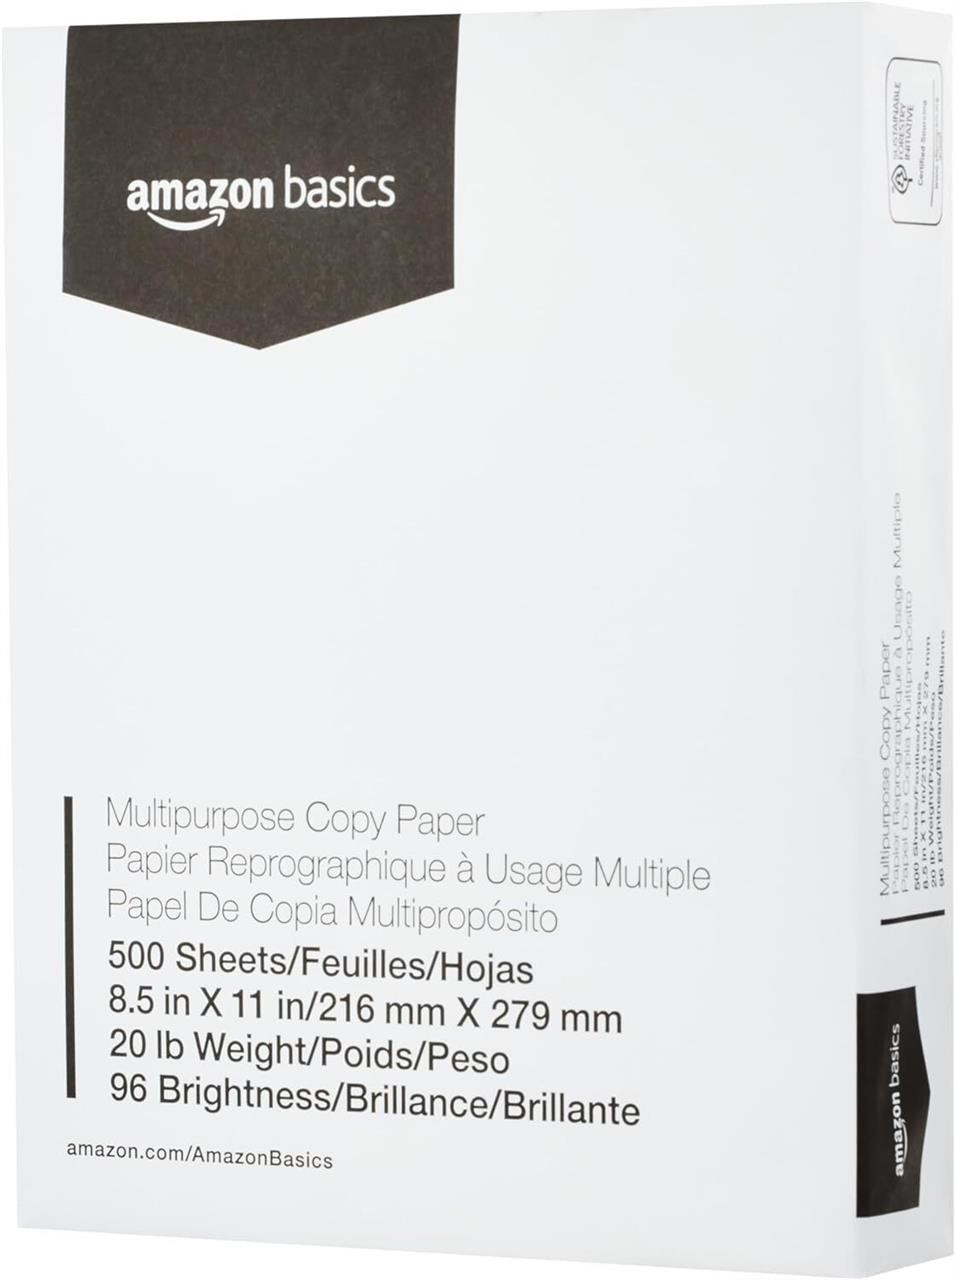 Amazon Basics Multipurpose Copy Paper  8.5 x 11